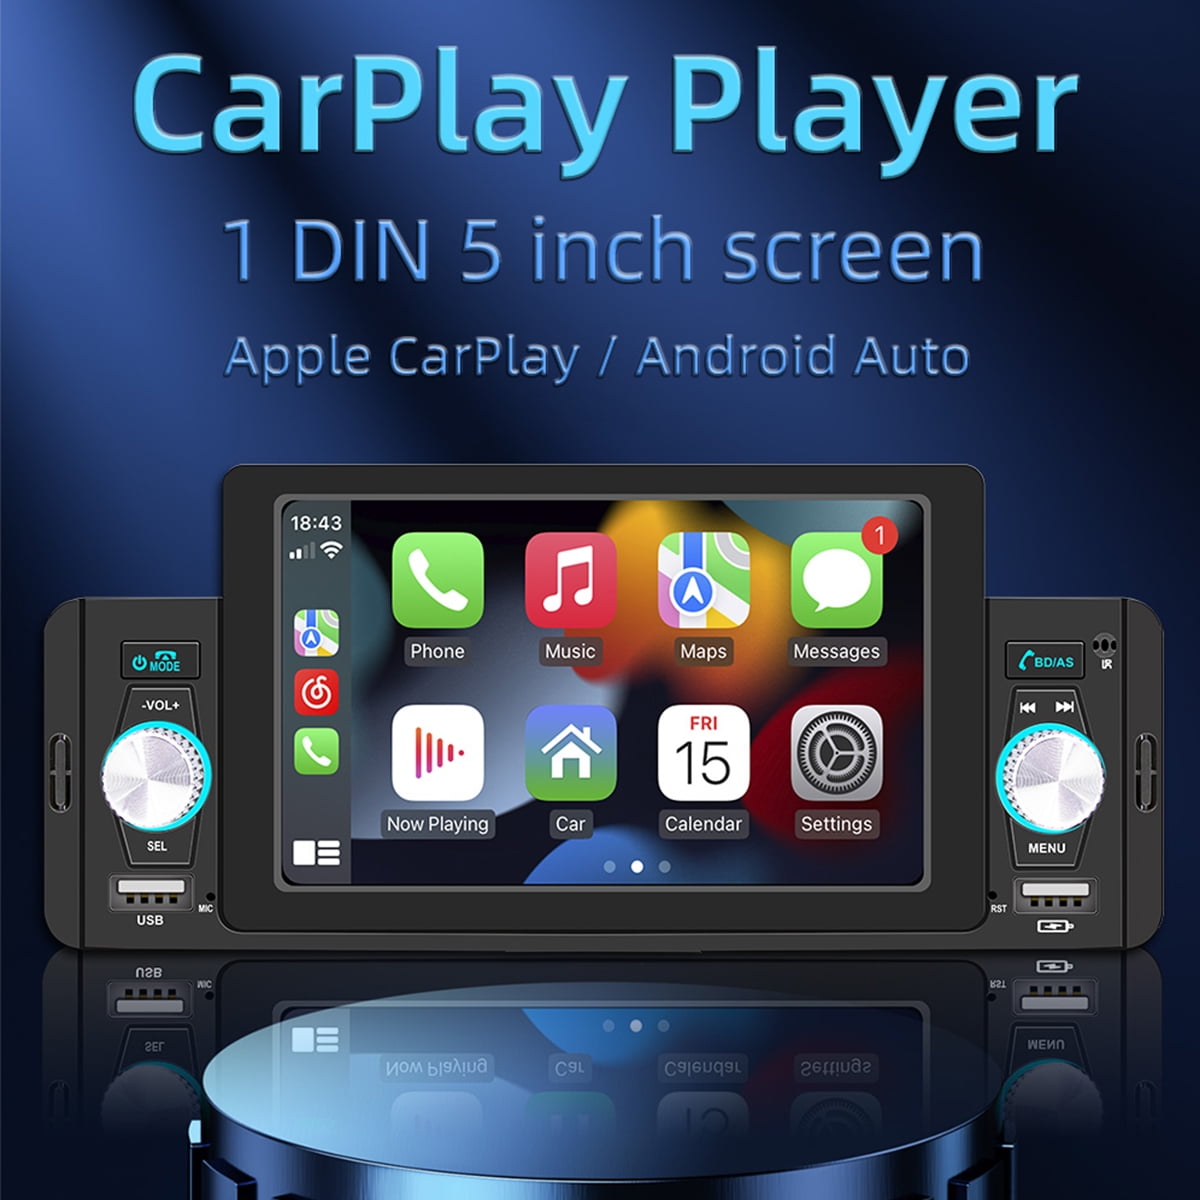 Radio 1 Din MP5 con pantalla táctil, Android auto y Apple car play